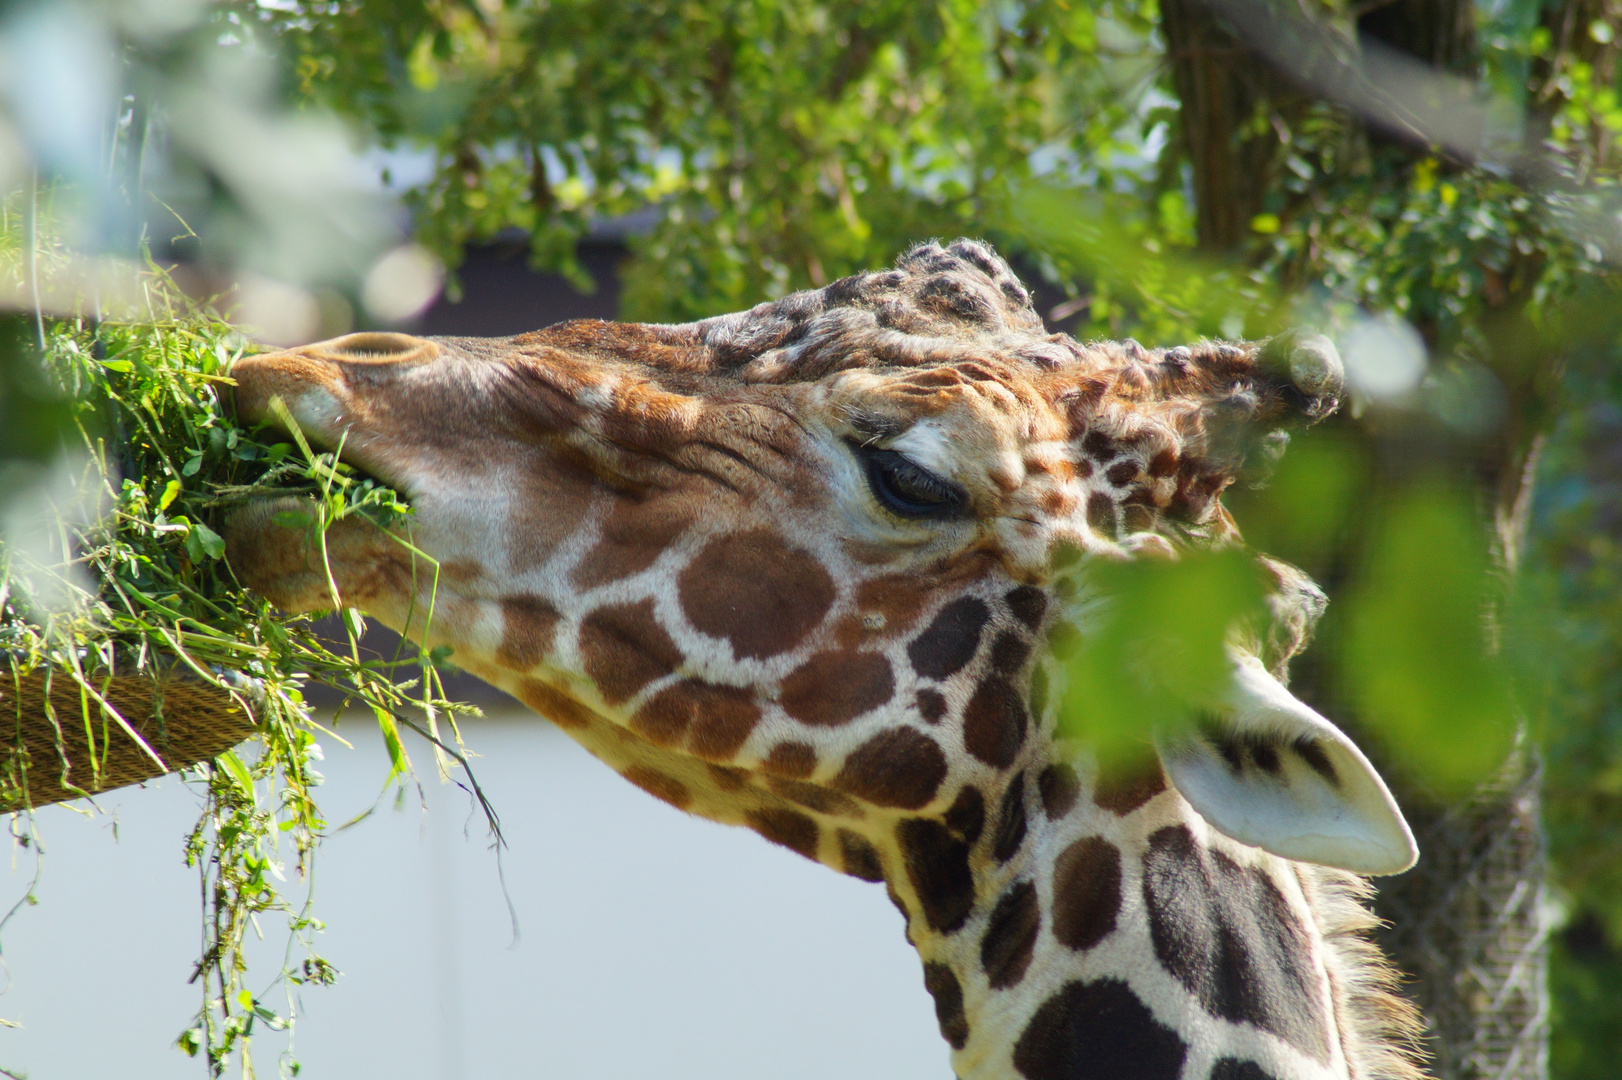 Giraffe beim fressen